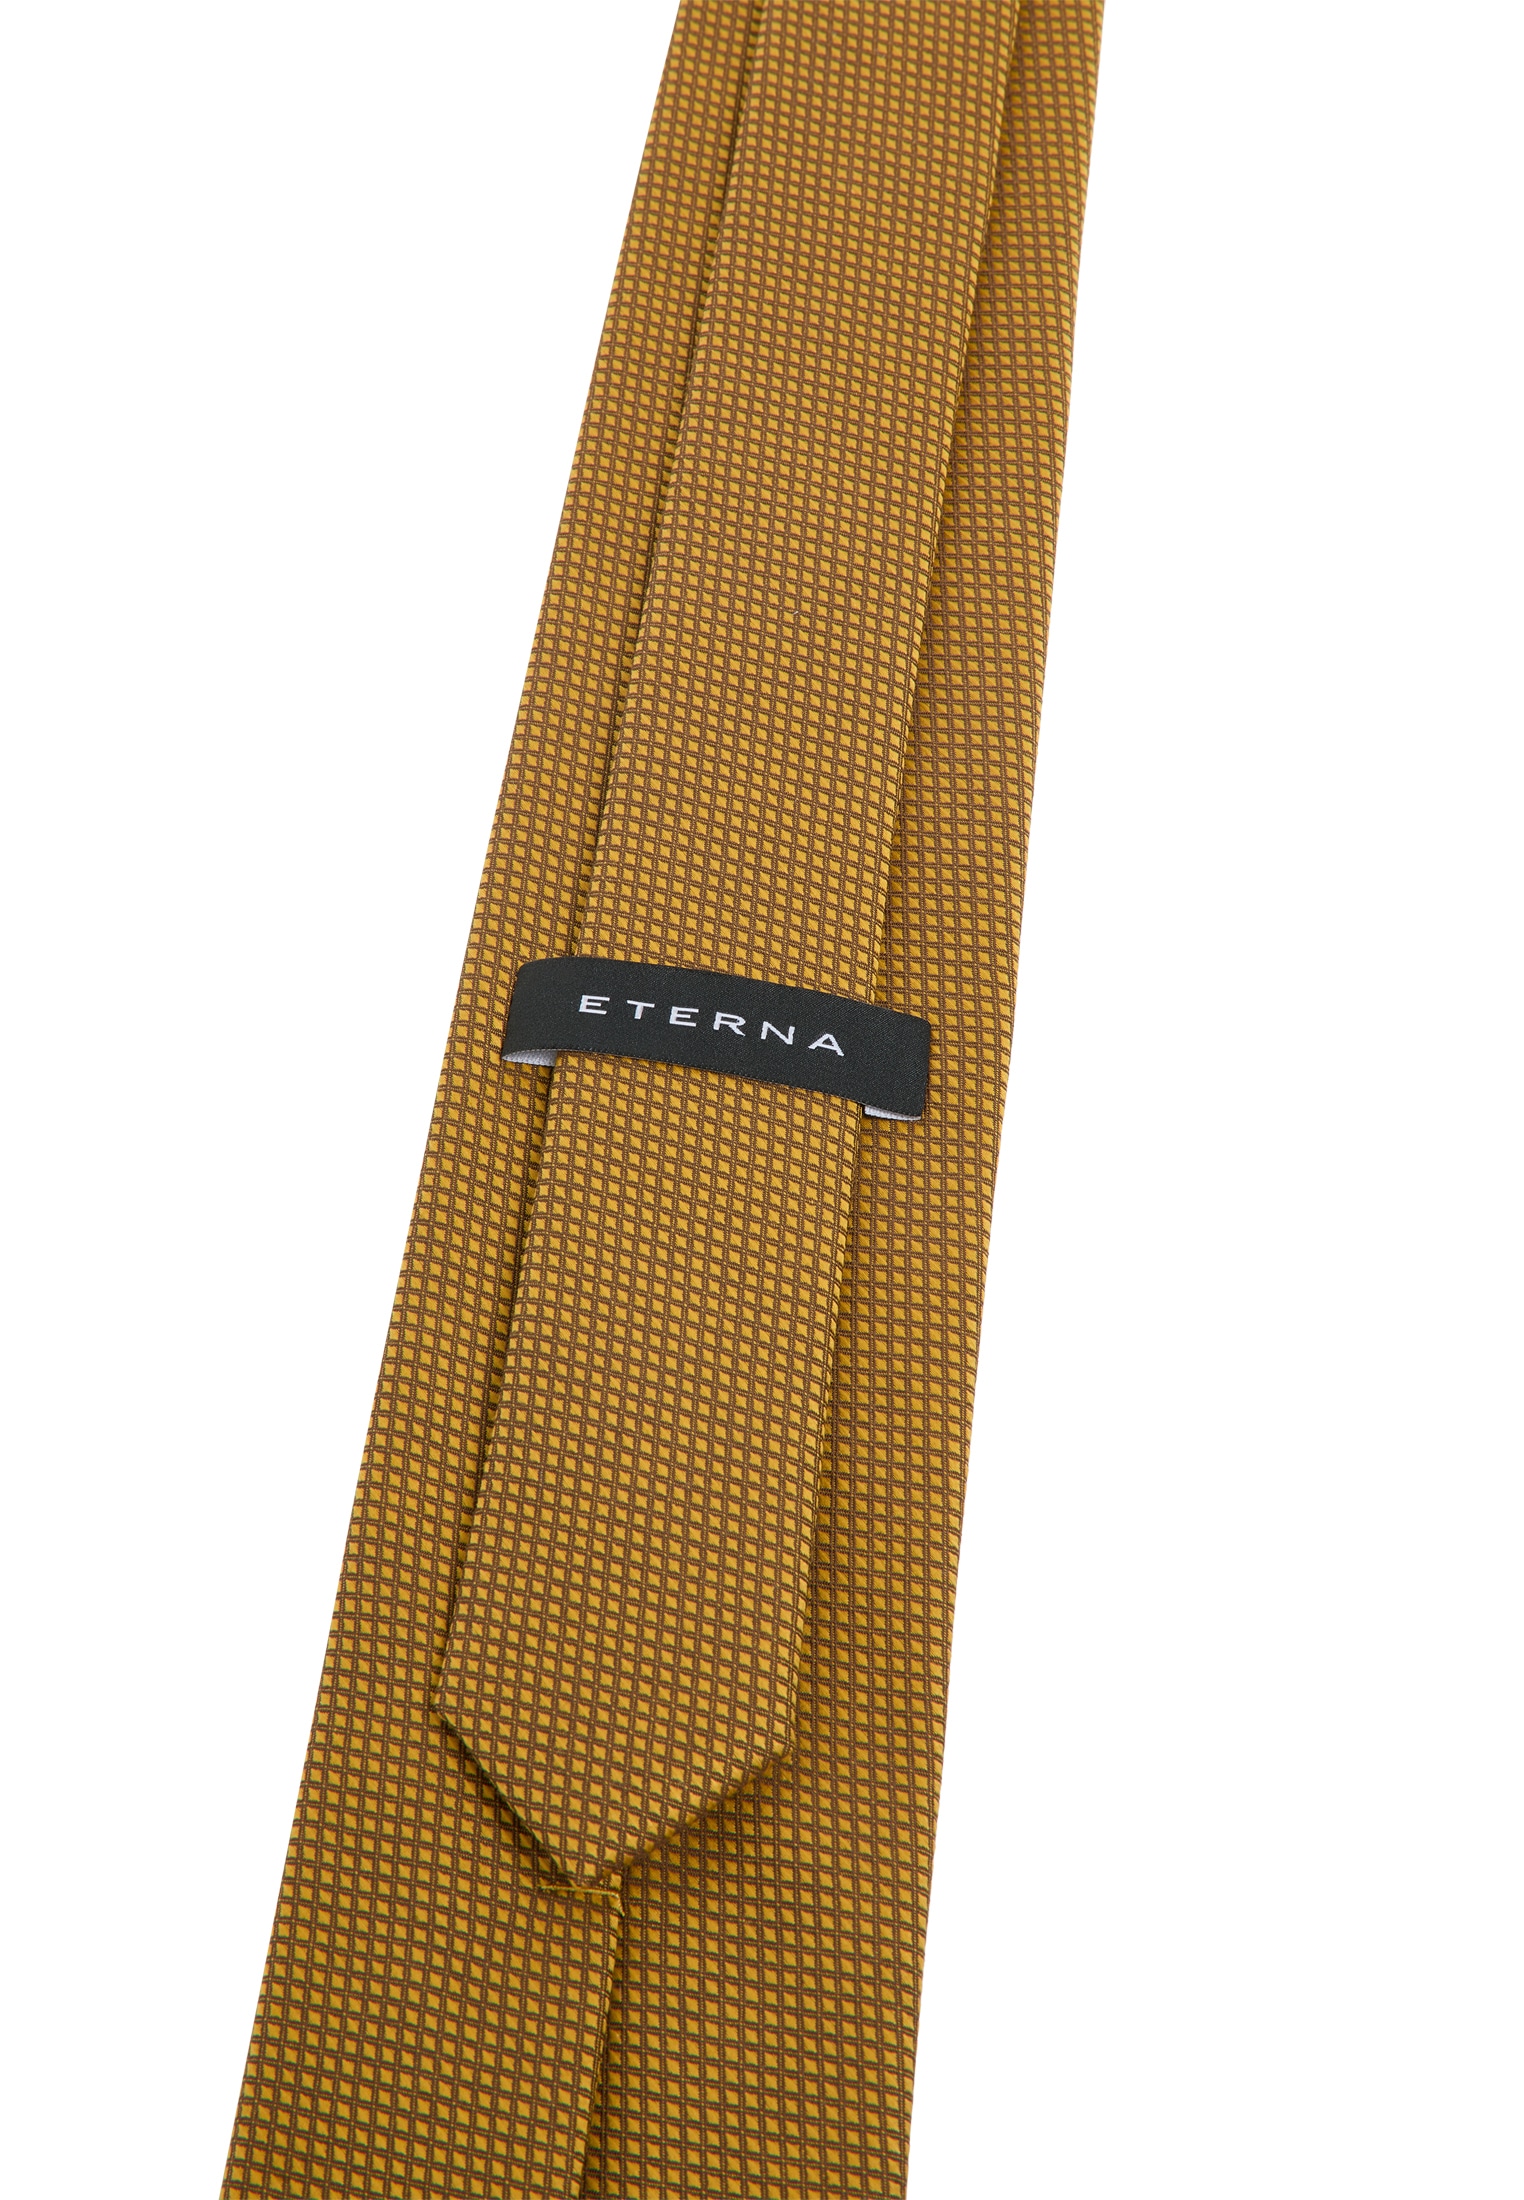 UNIVERSAL bestellen Krawatte | Eterna online